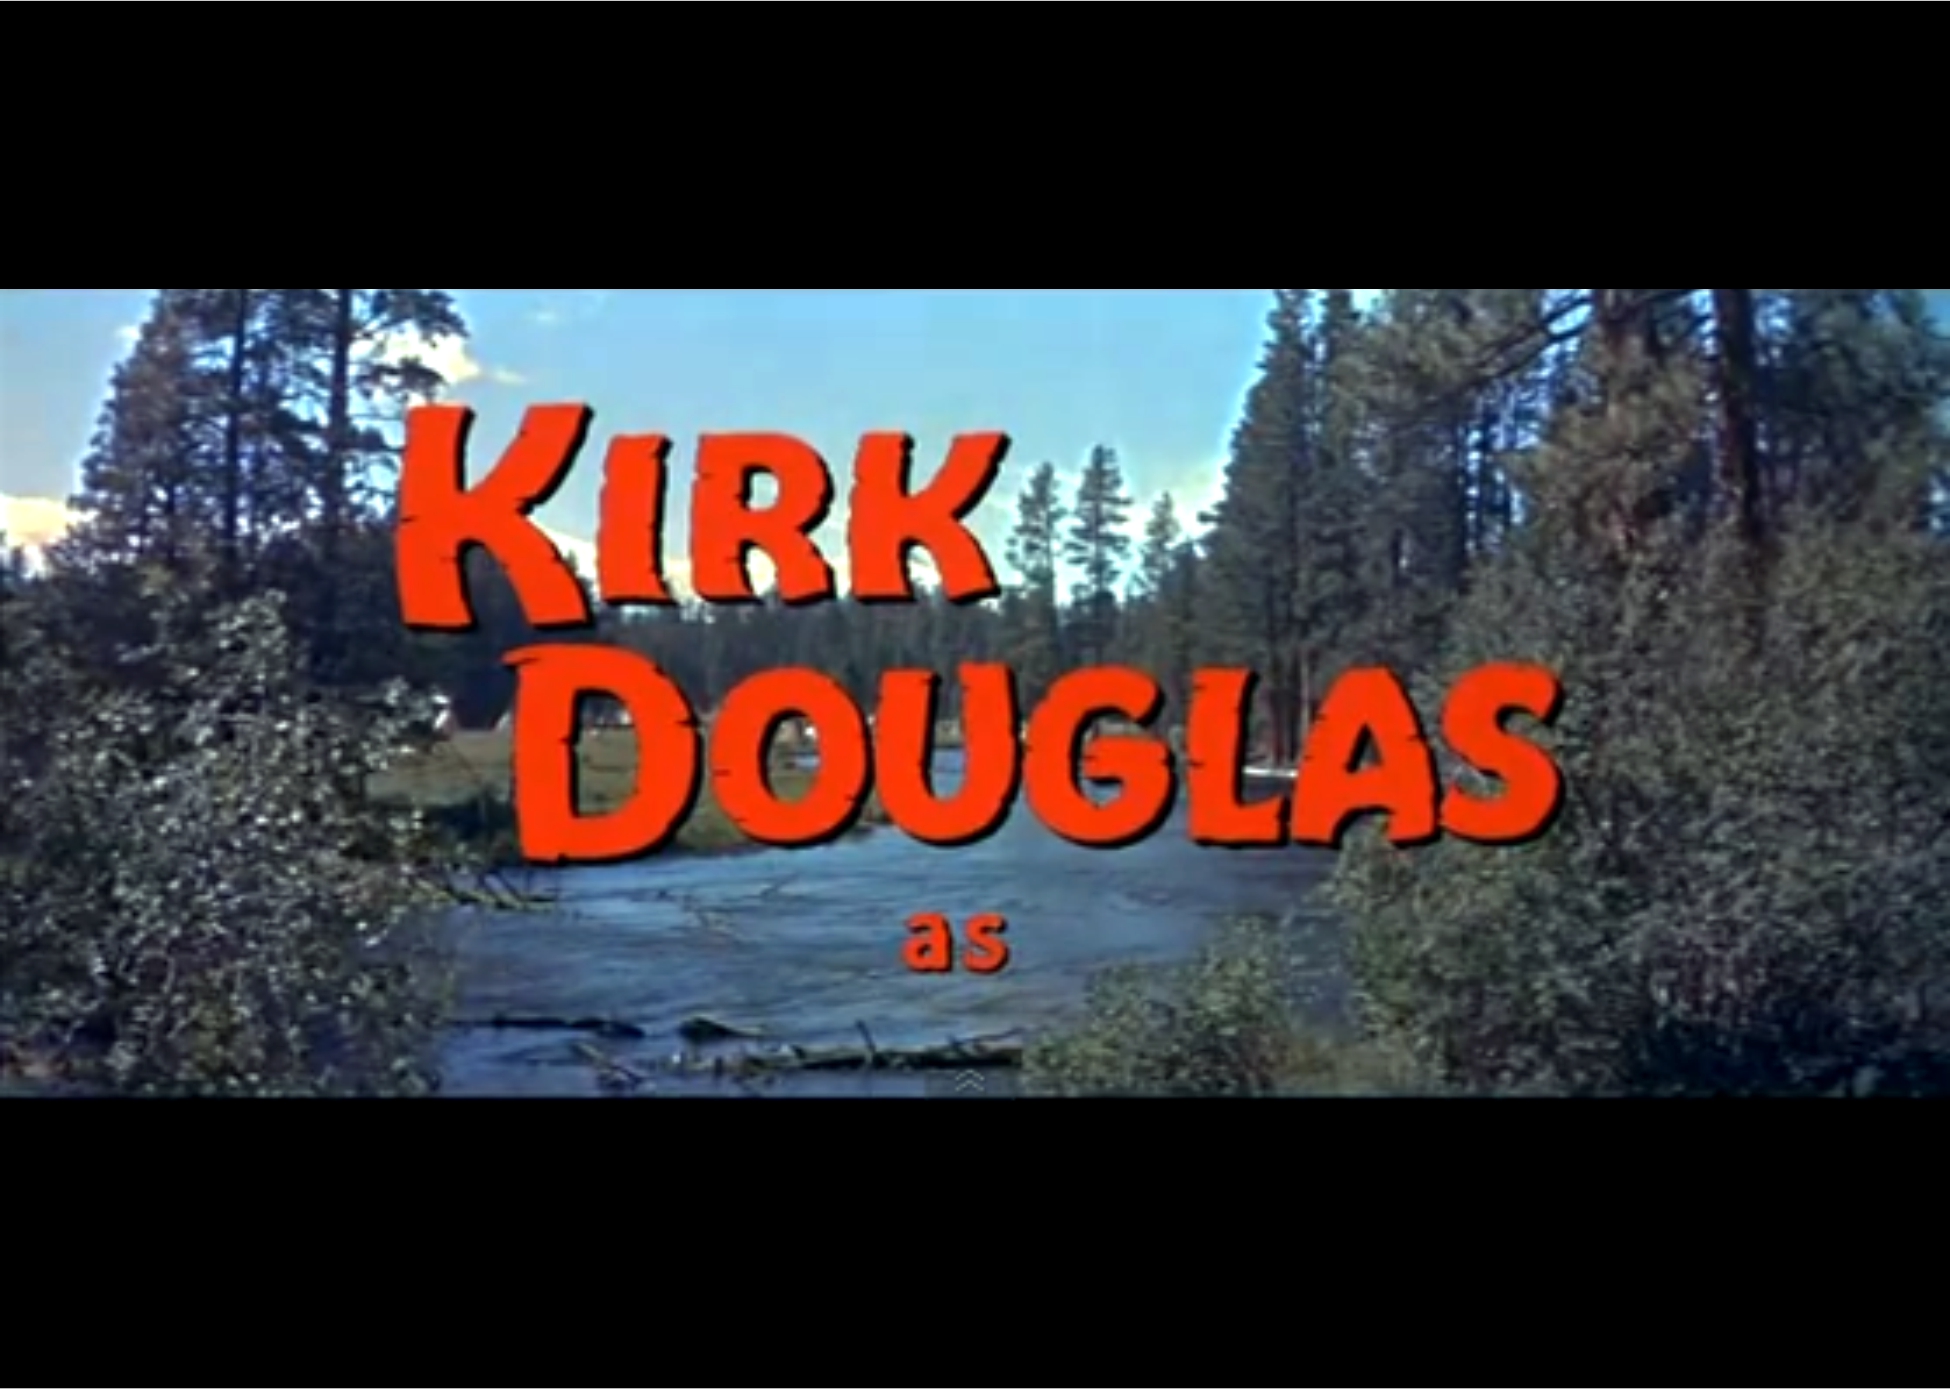 Kirk Douglas as